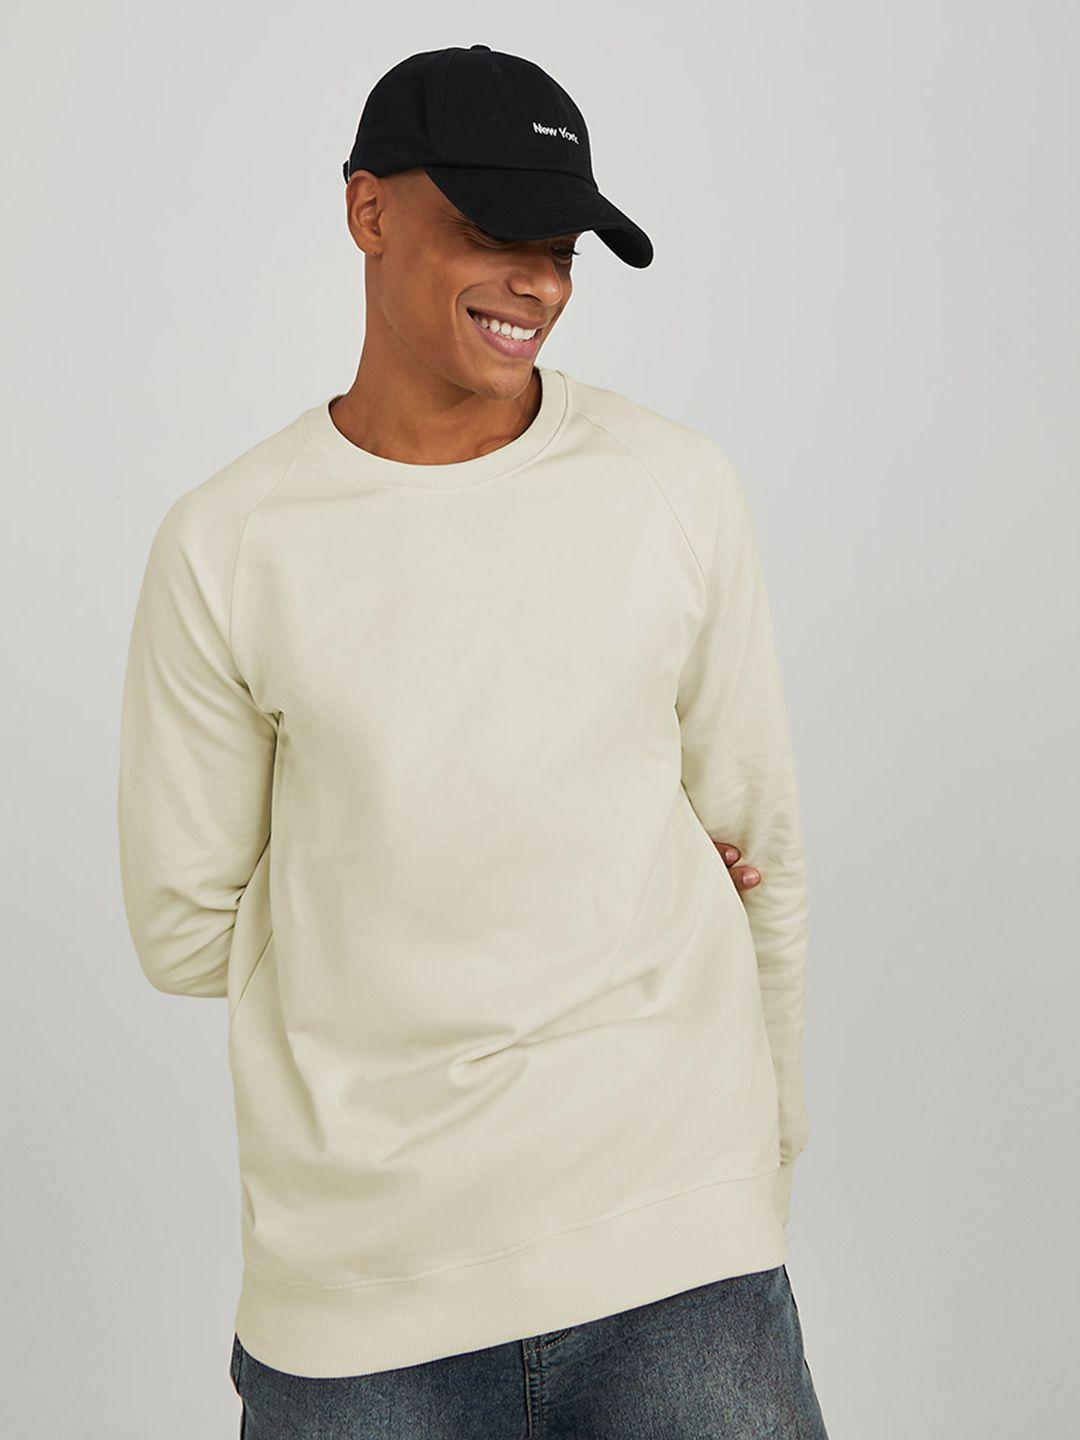 styli raglan sleeves cotton regular fit sweatshirt